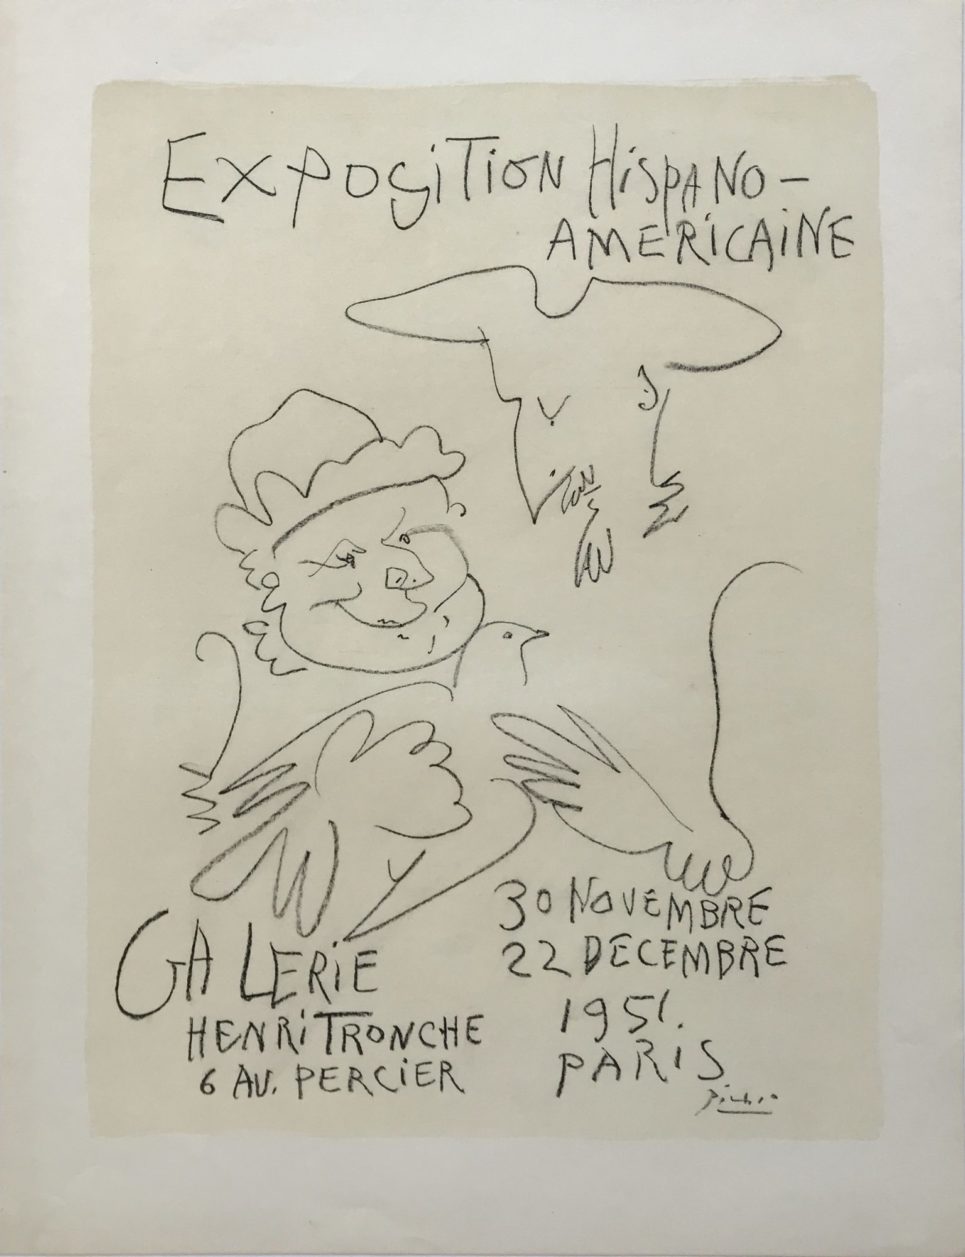 Pablo Picasso - Exposition Hispano-Americaine